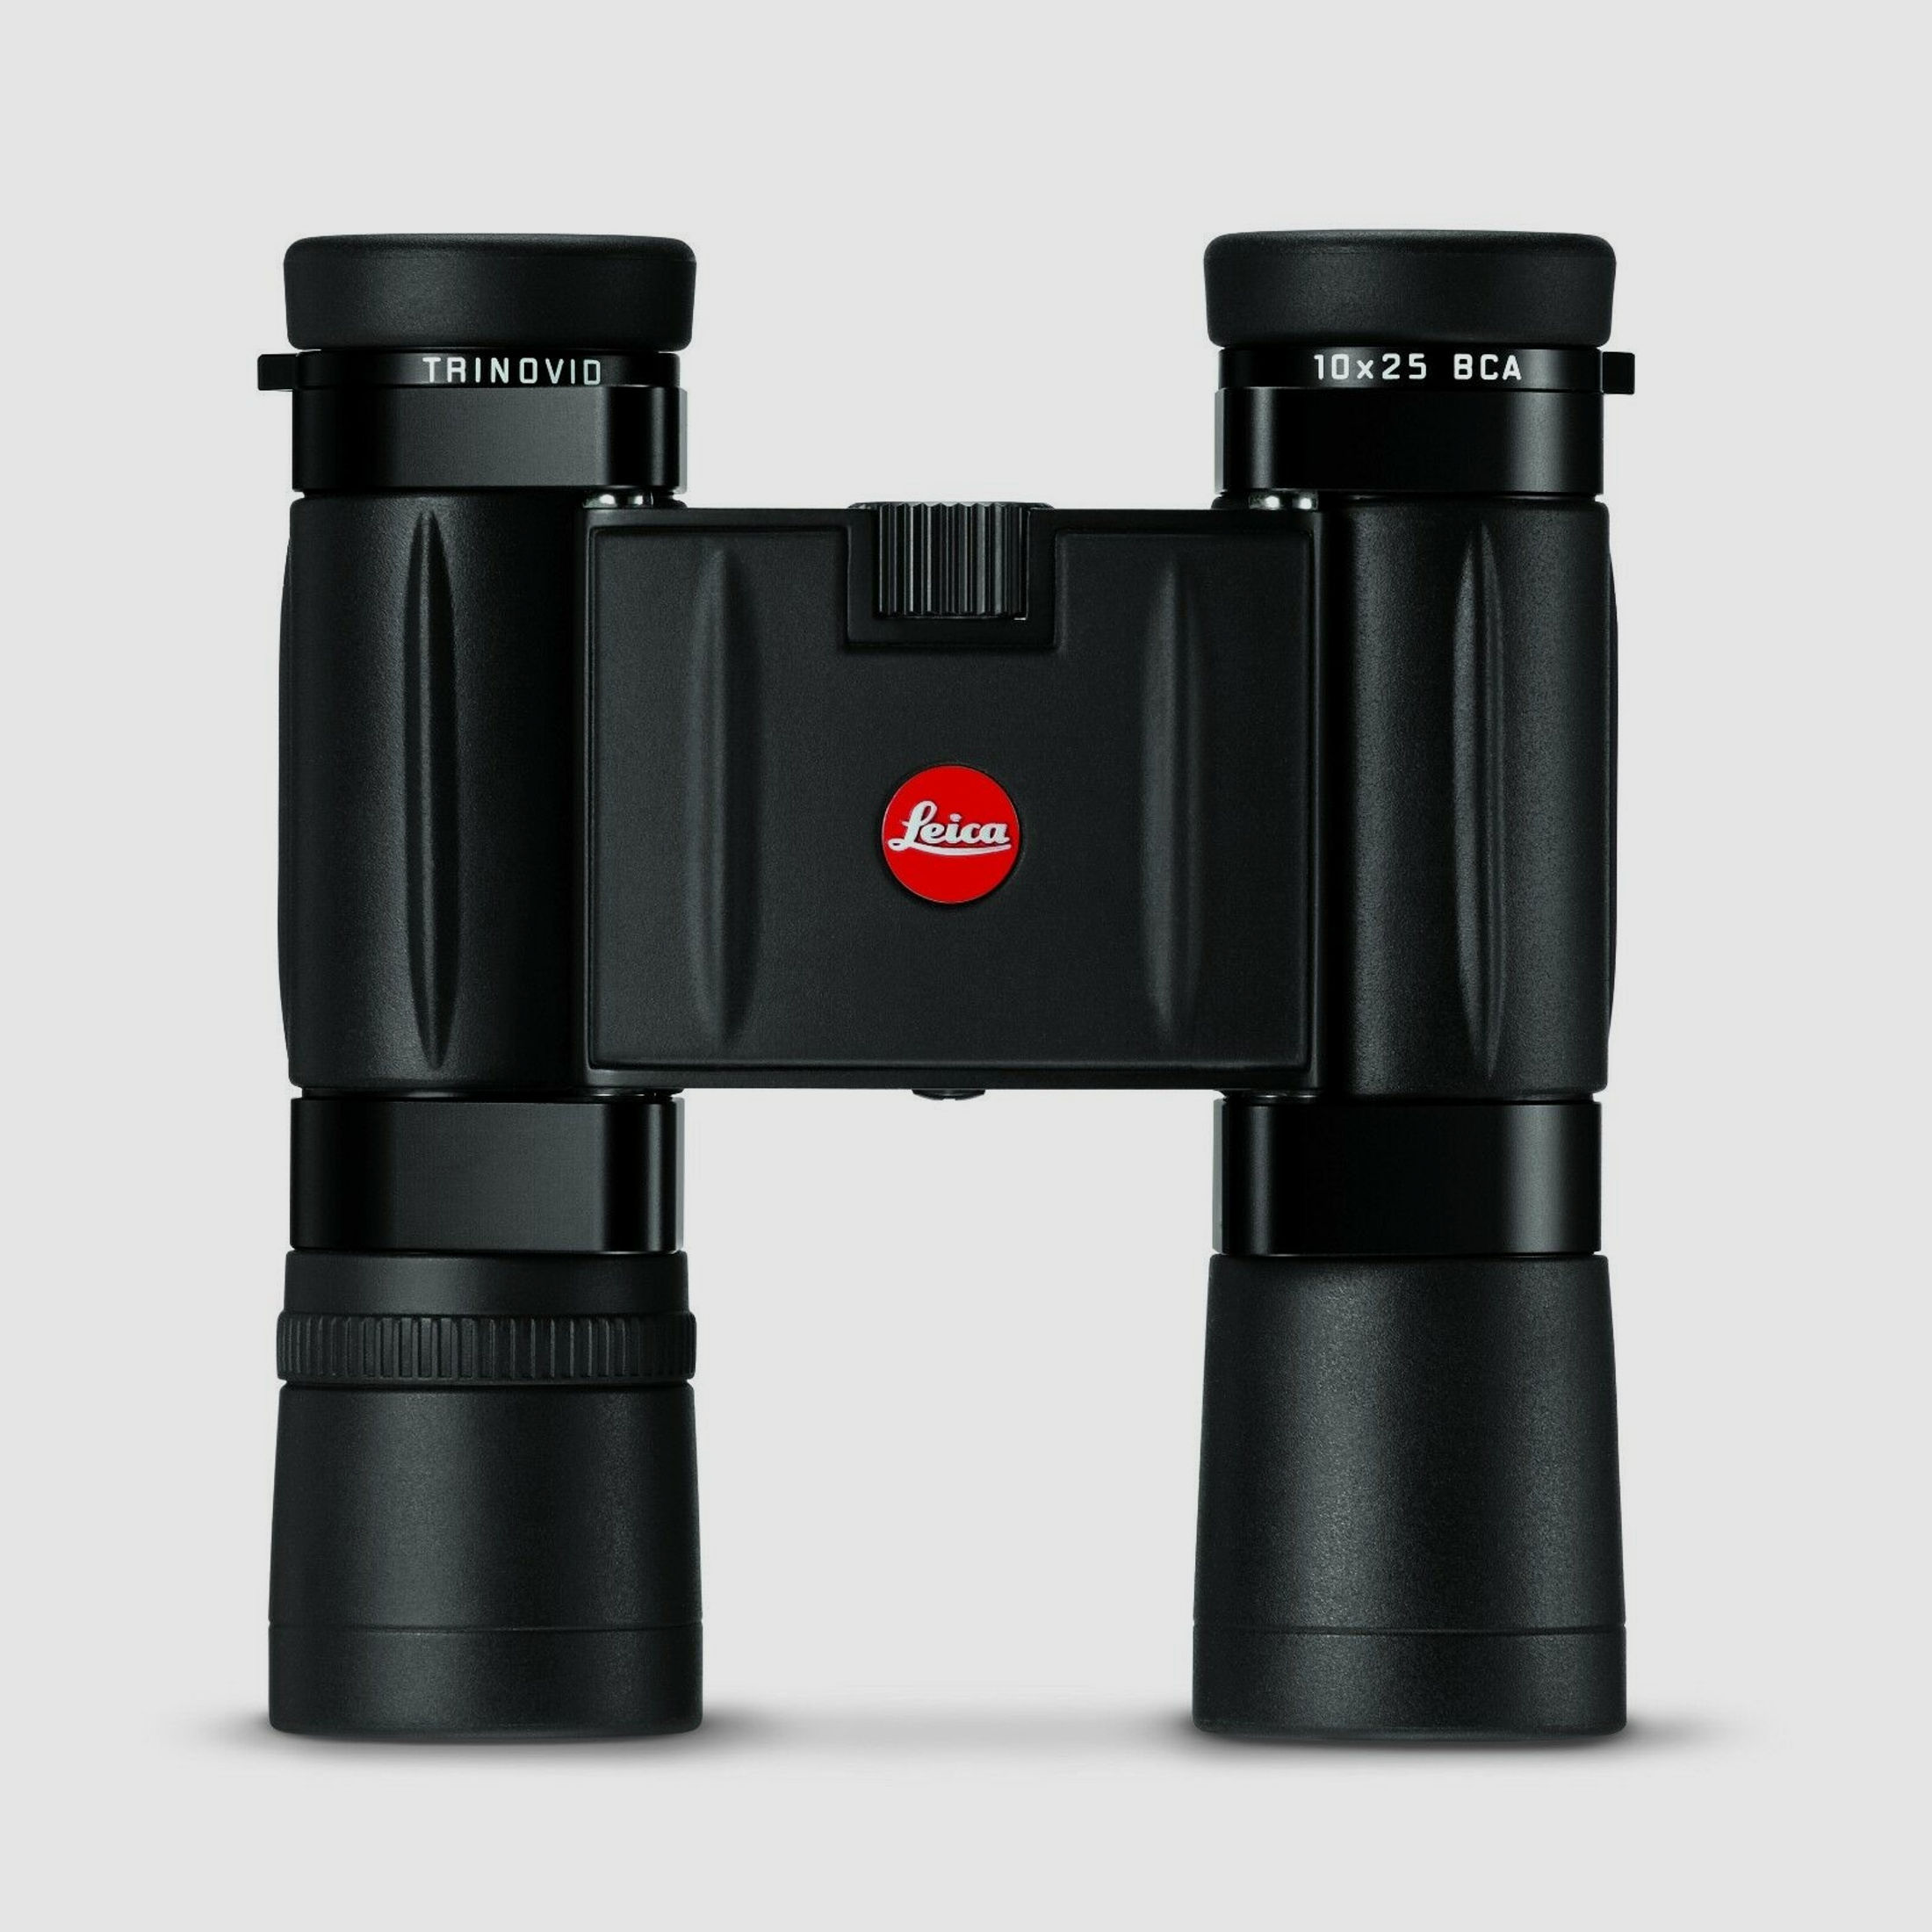 Leica Fernglas Trinovid 10x25 BCA kompakt 40343